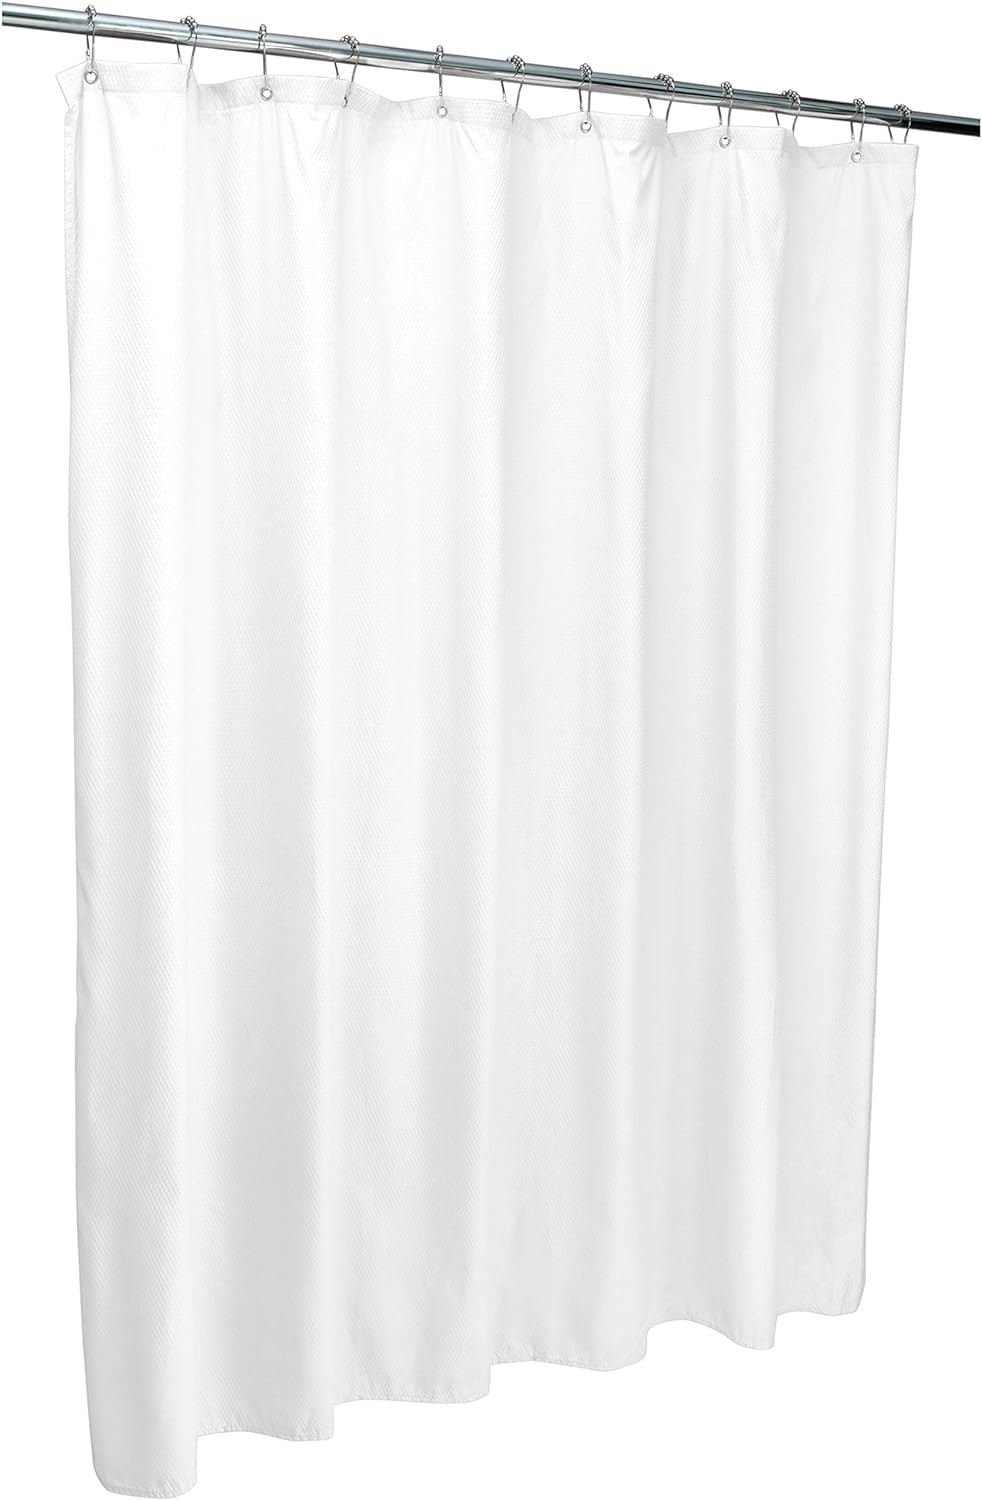 Bath Bliss Shower Curtain & Hook Set in White